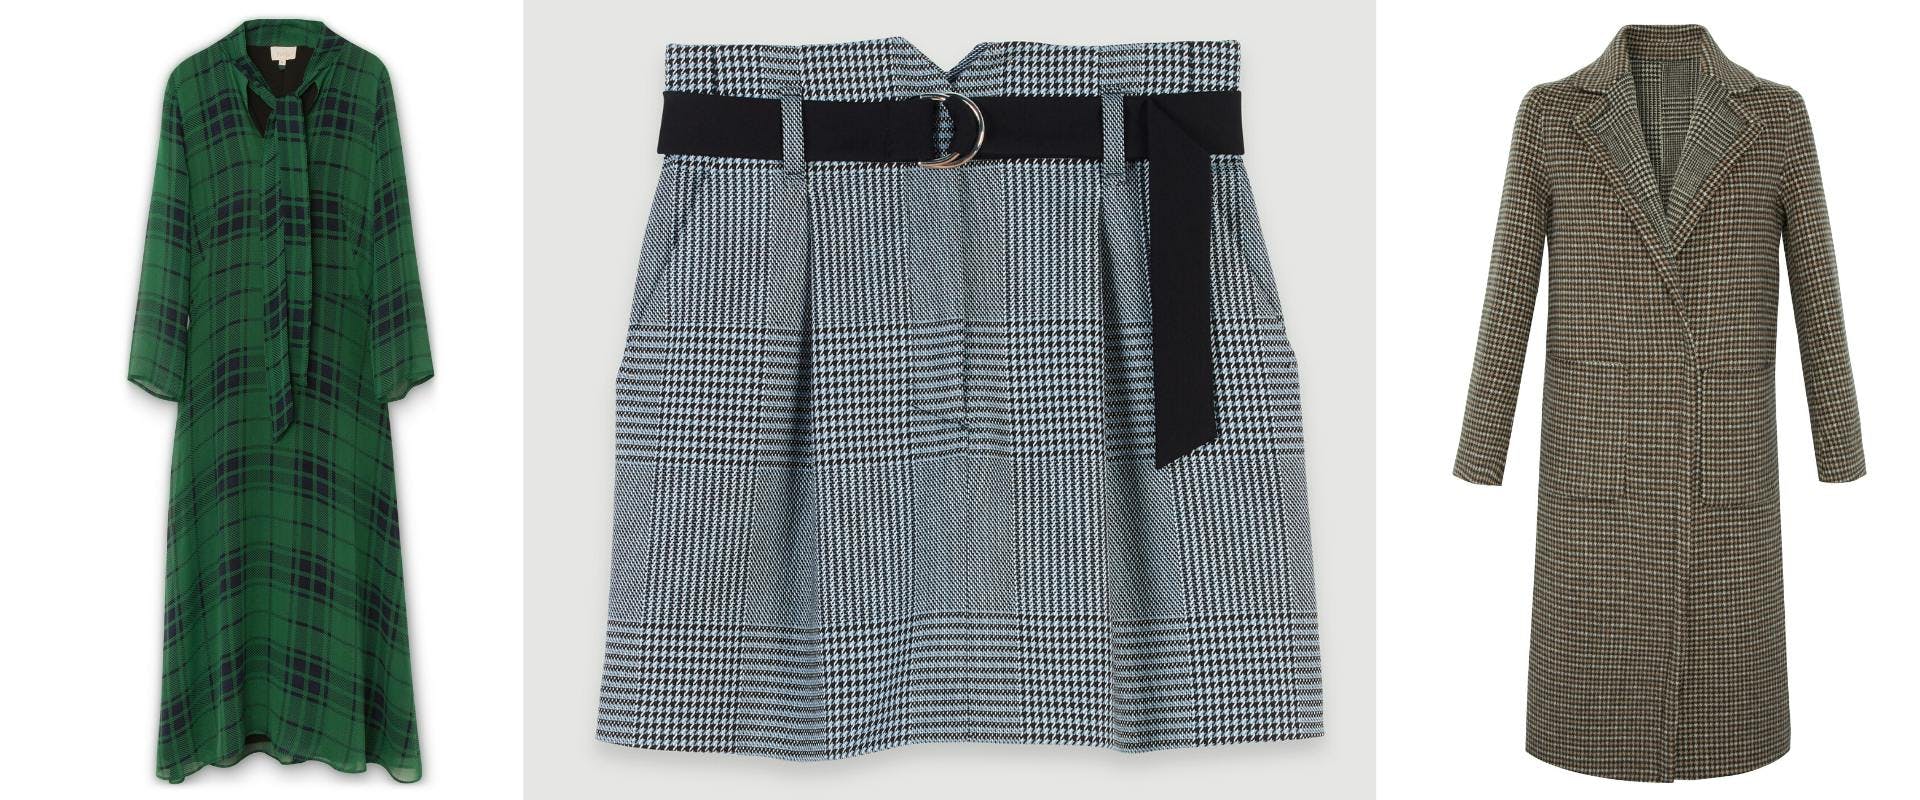 clothing apparel shorts skirt miniskirt